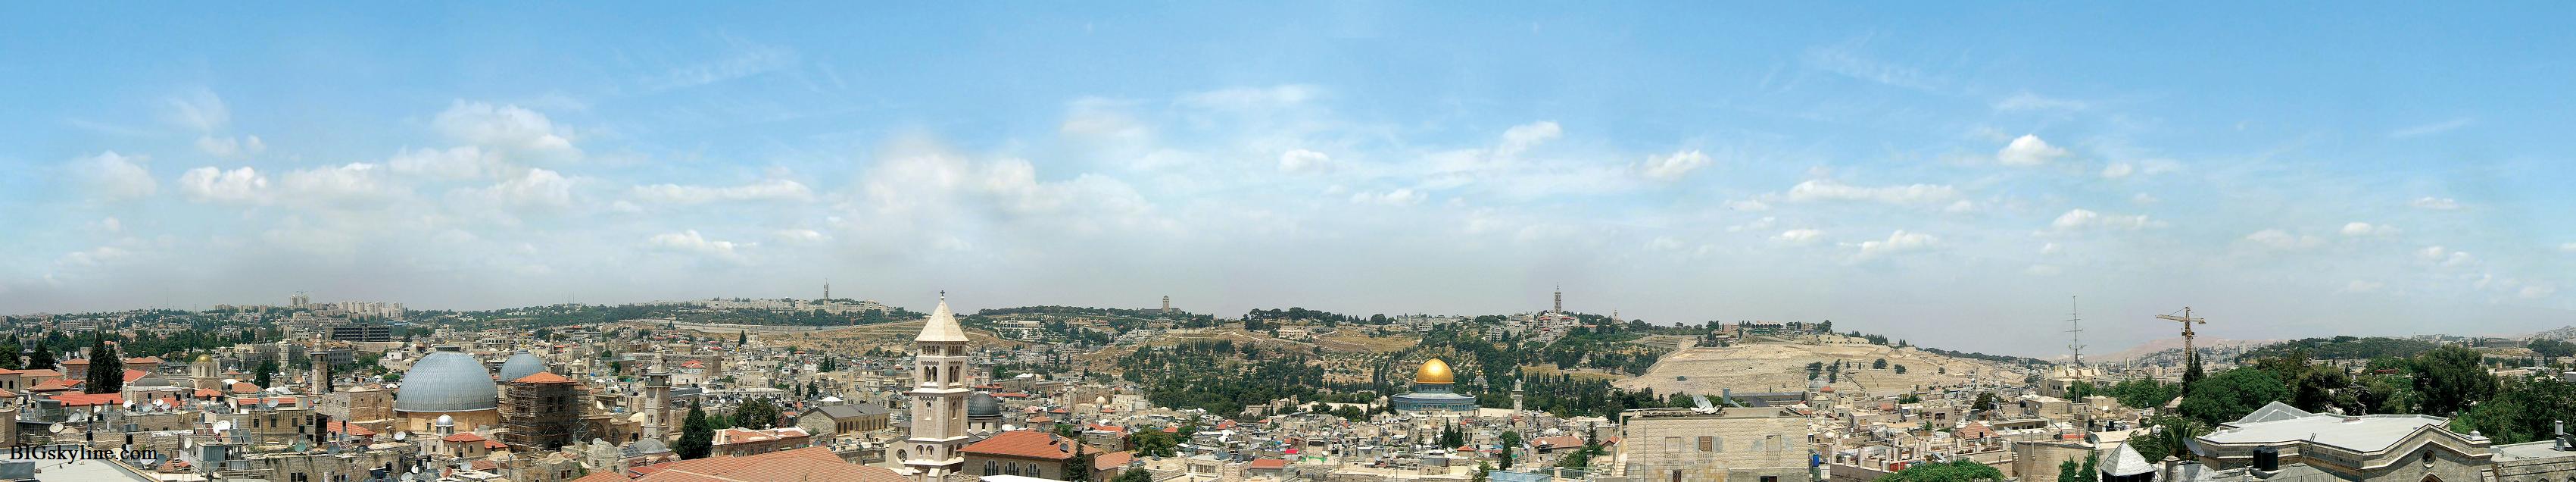 Panoramic photograph of Jeruselum